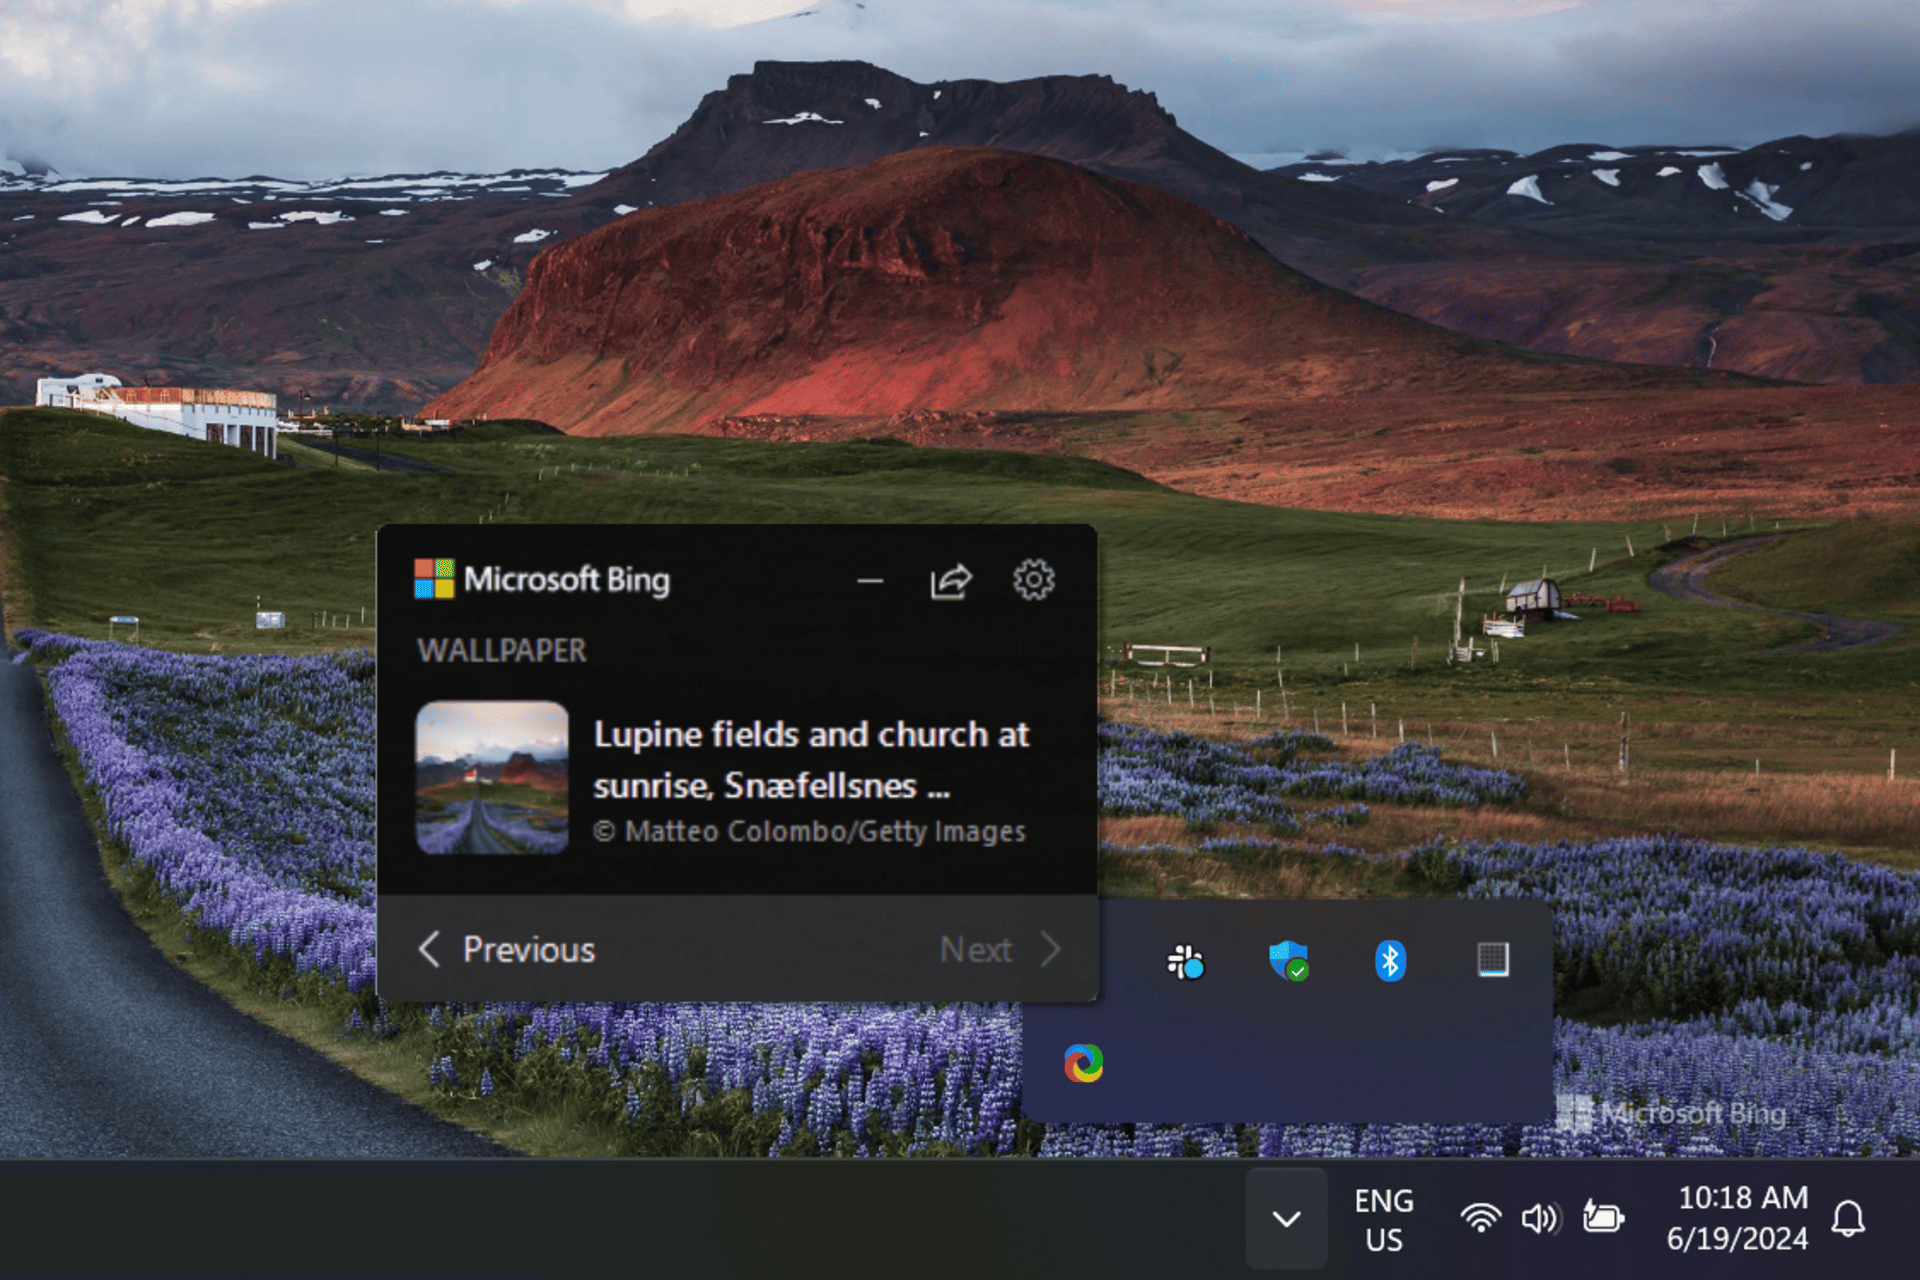 Bing Wallpaper Not Changing the Desktop Background [Solved]